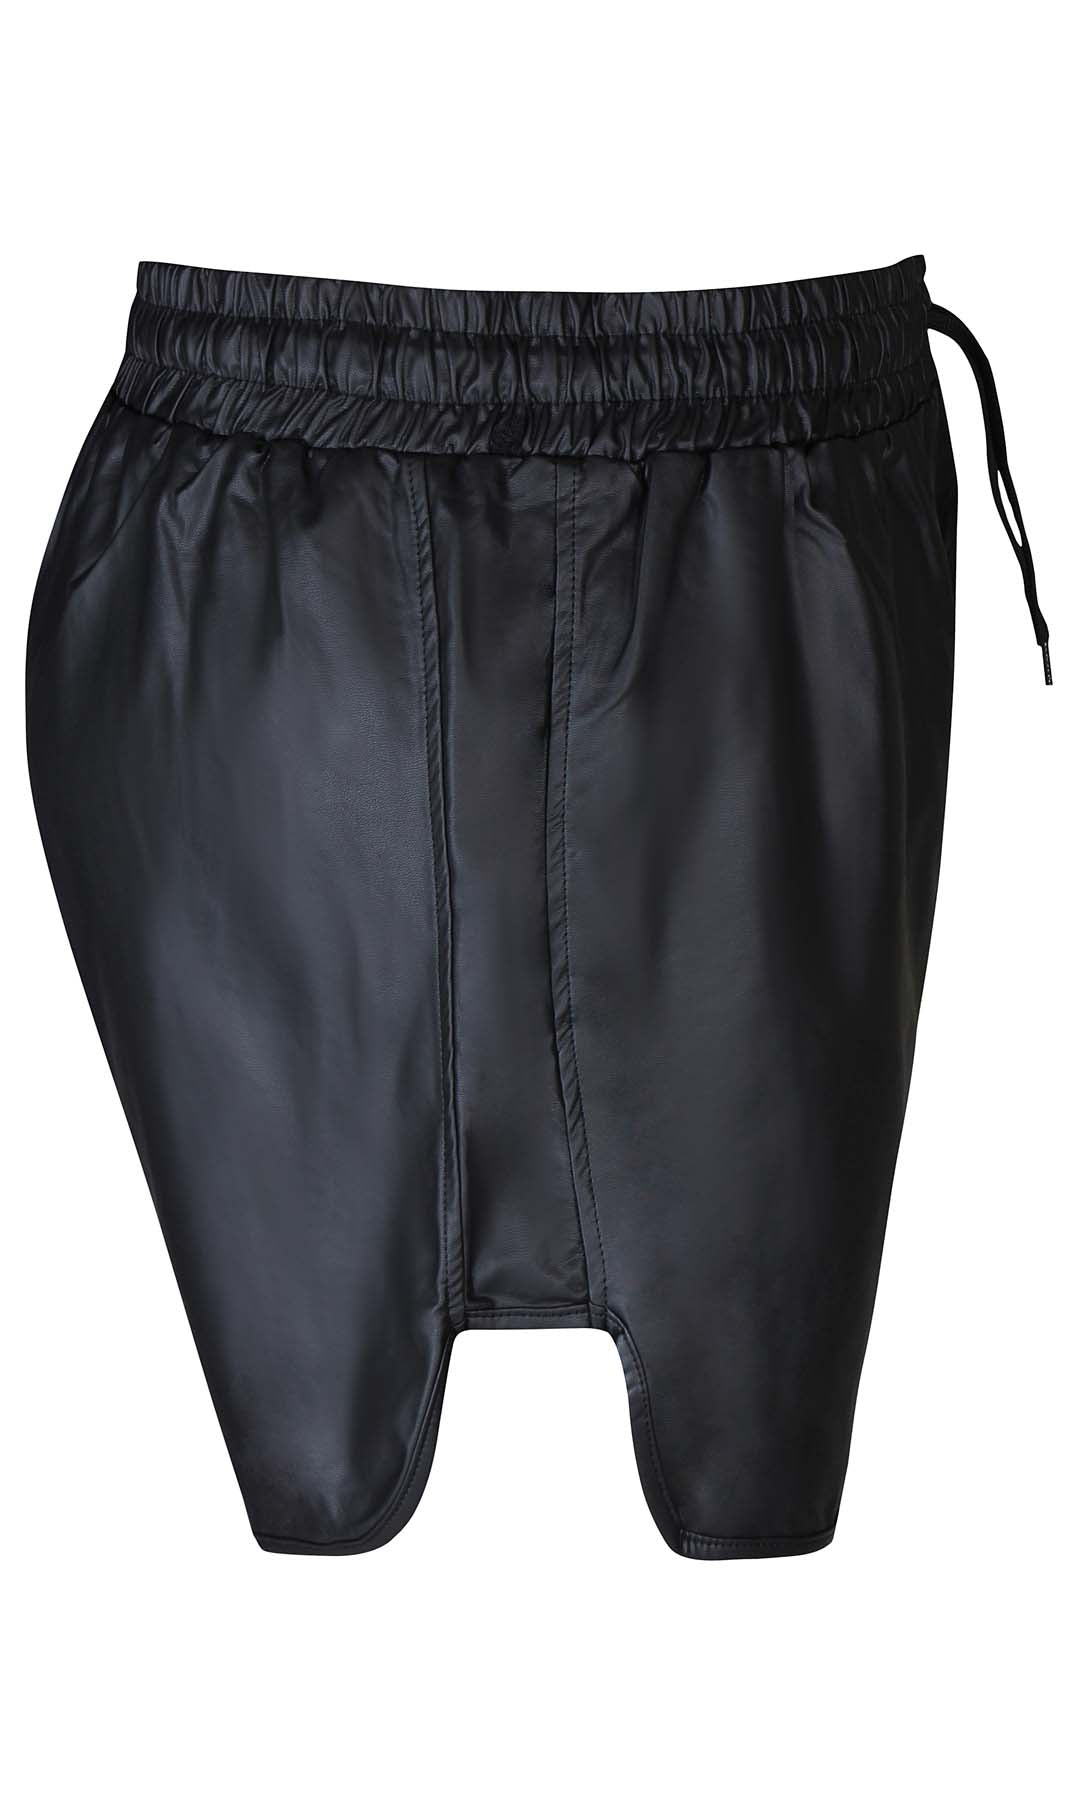 kaia 067 - Shorts - Black